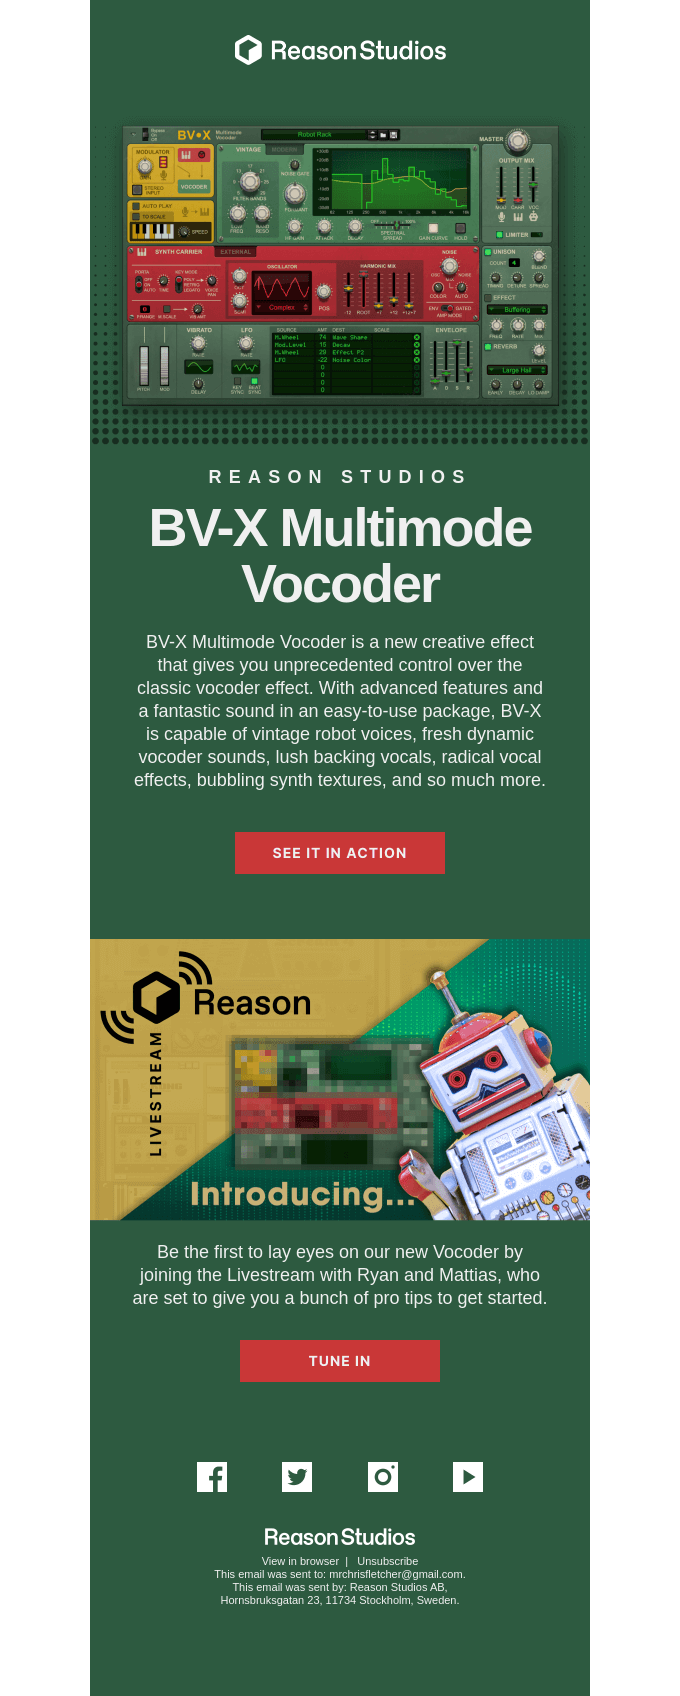 🆕 The BV-X Multimode Vocoder has arrived!